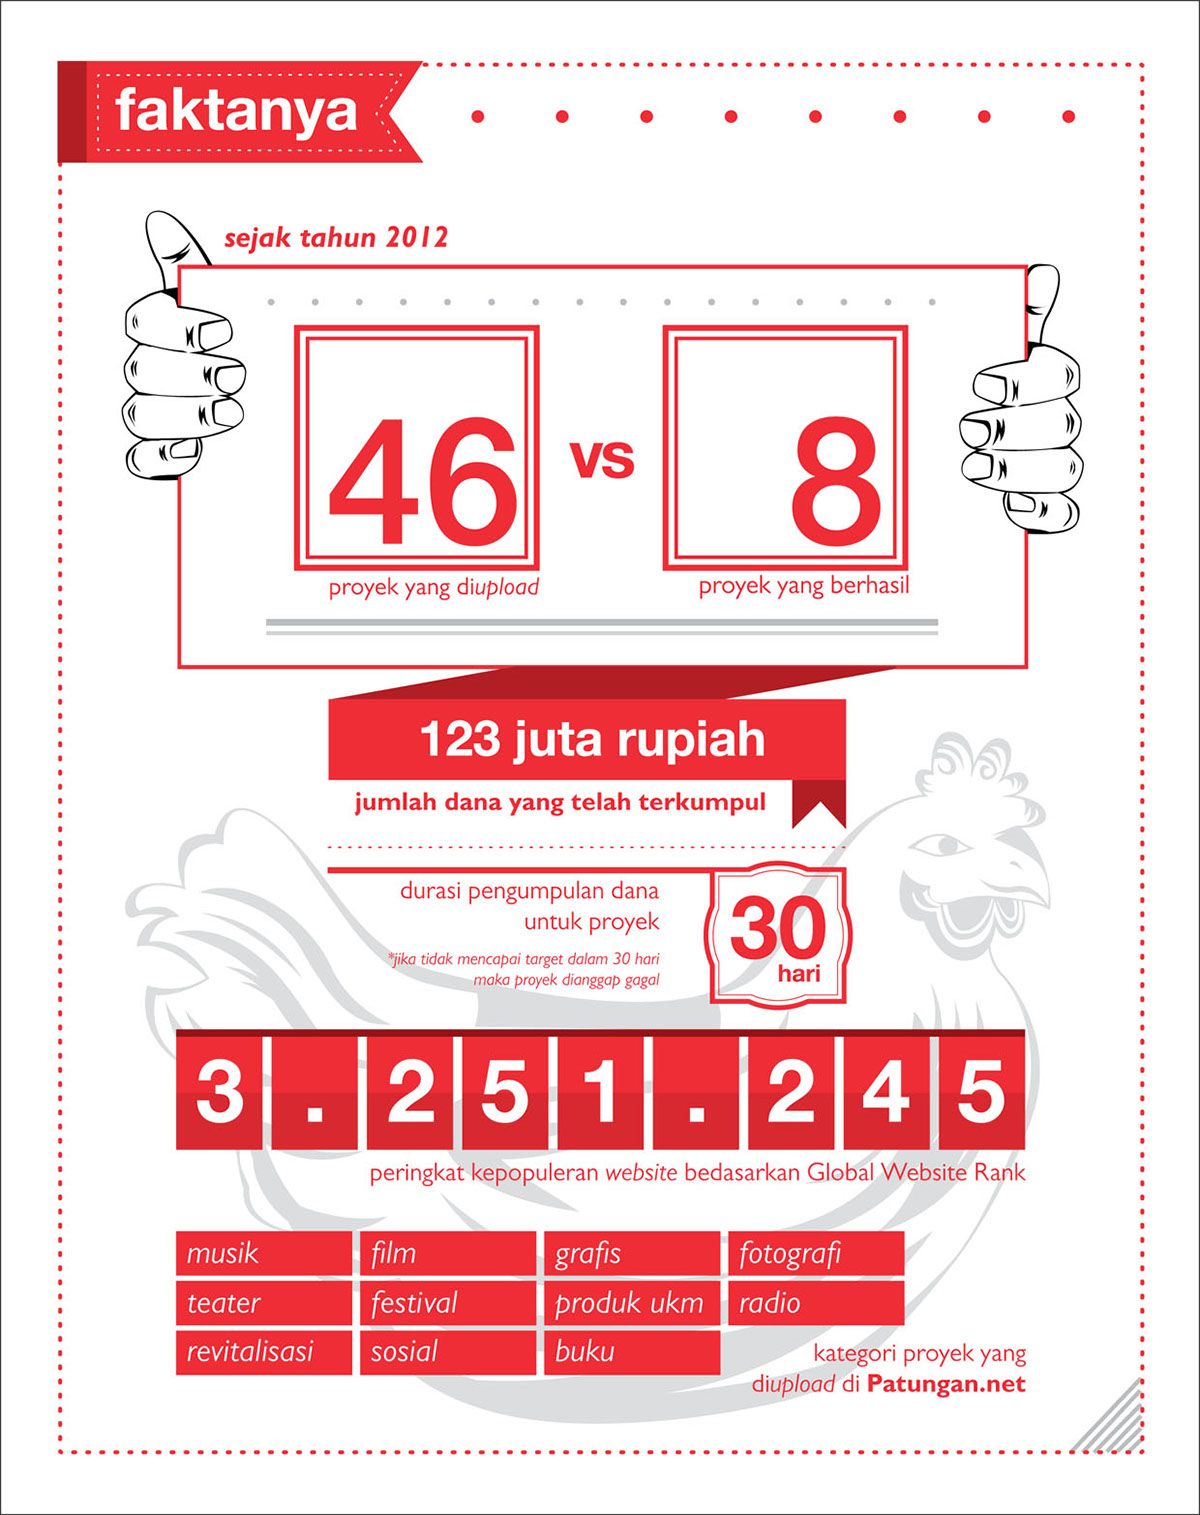 patungan.net patungan infografik infographic aikon enrico halim assignment White red poster